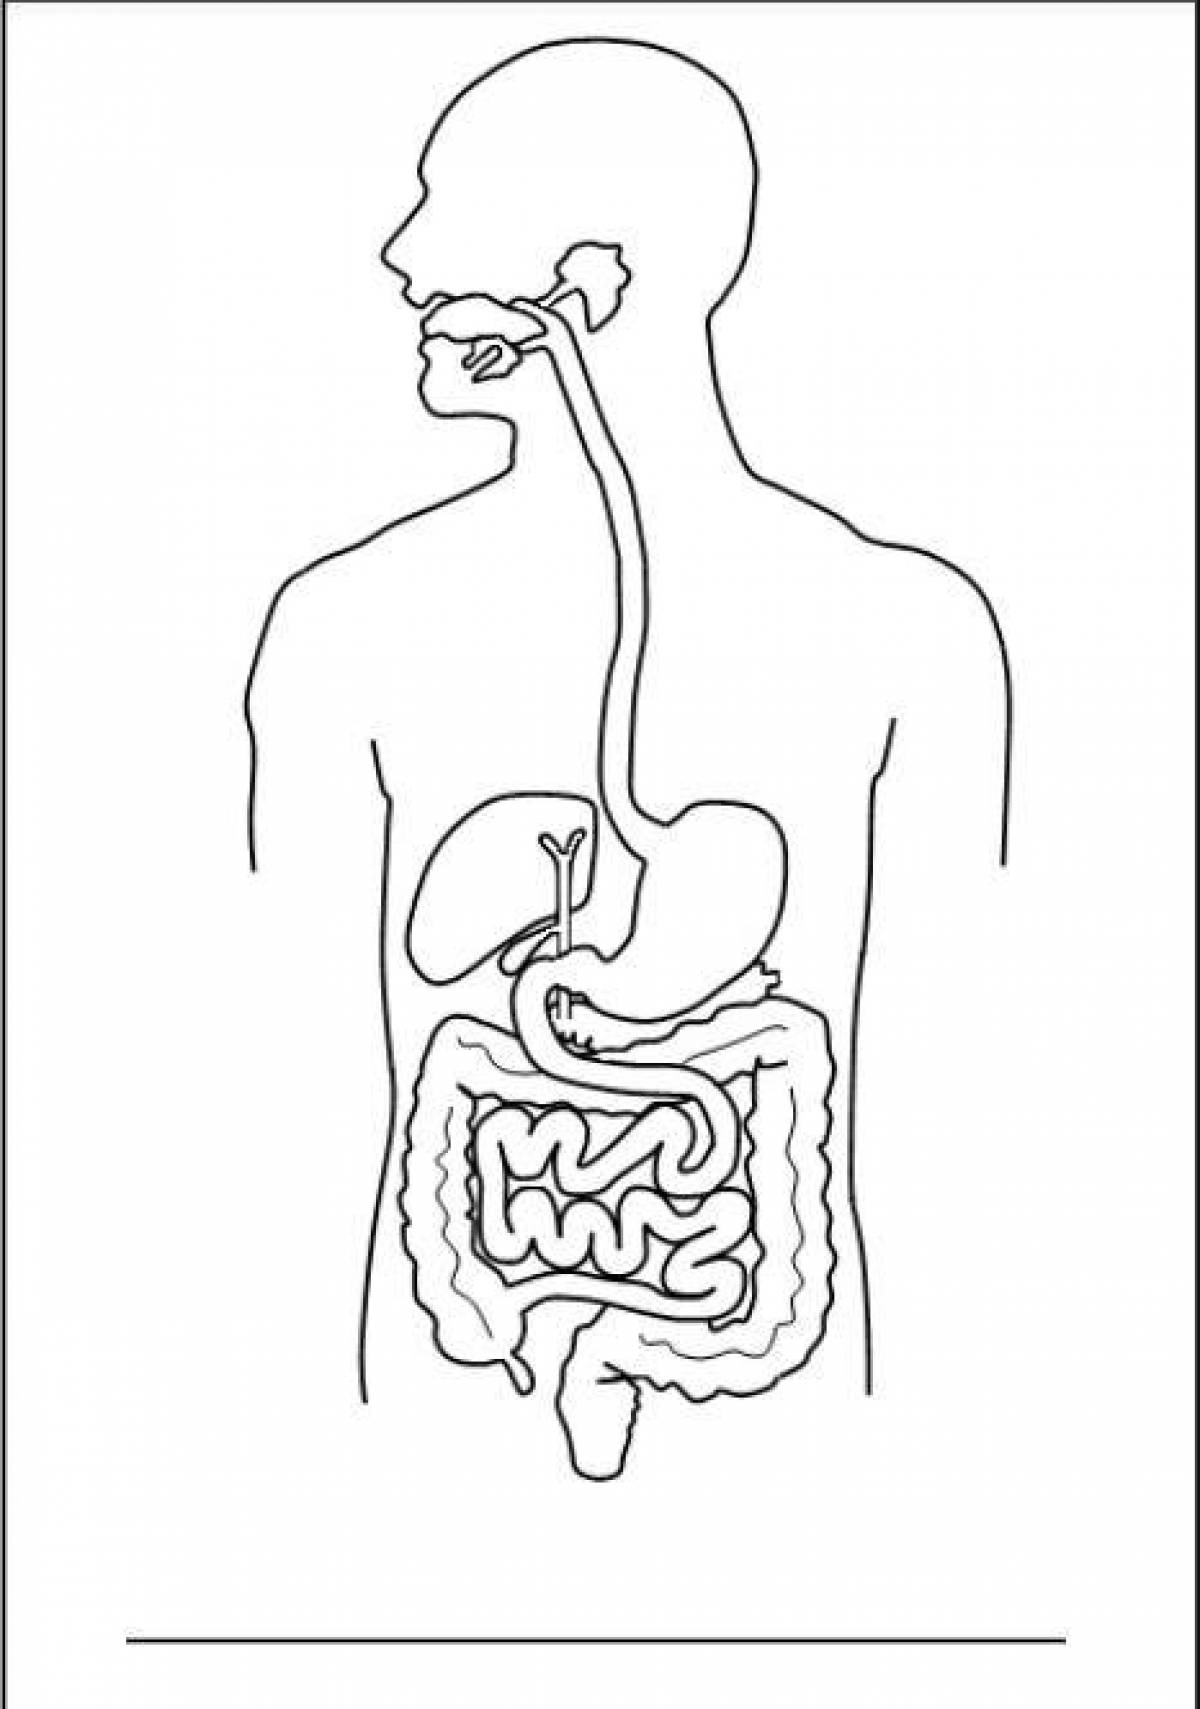 Unique digestive system coloring page